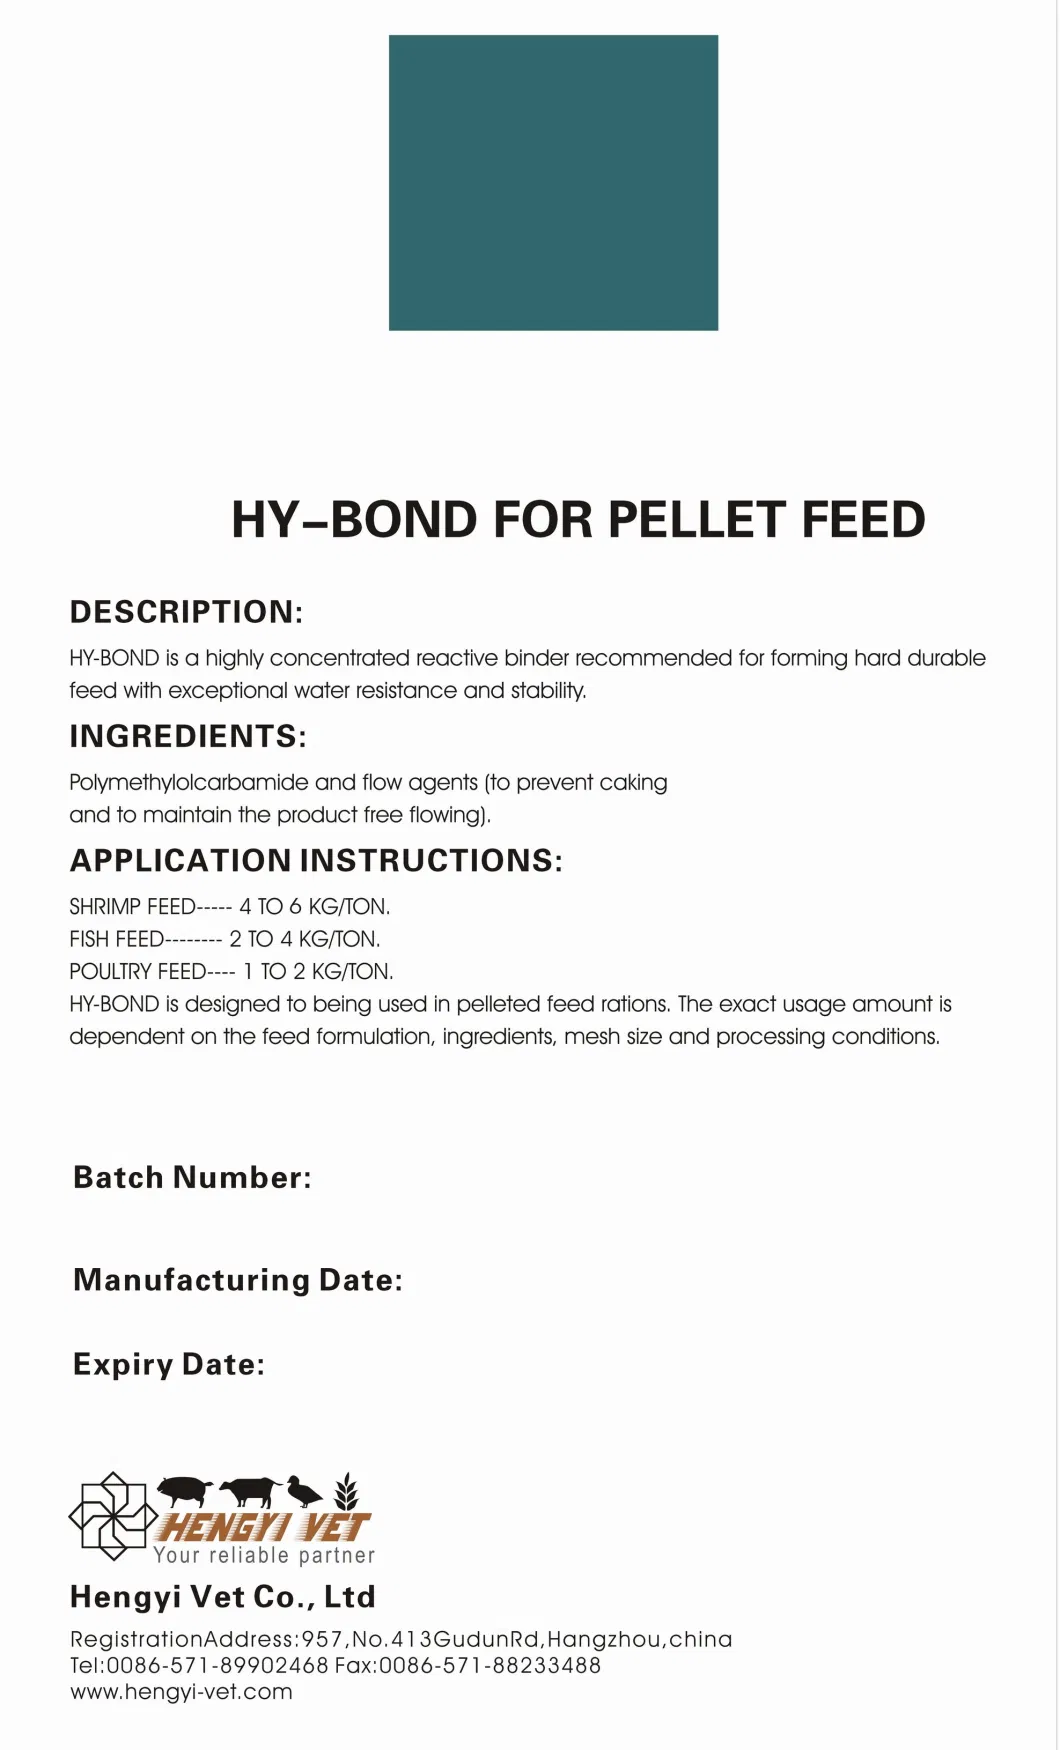 Hy-Bond Pellet Binder Feed Grade PMC (Polymethylolcarbamide) Polymethyl Carbamide